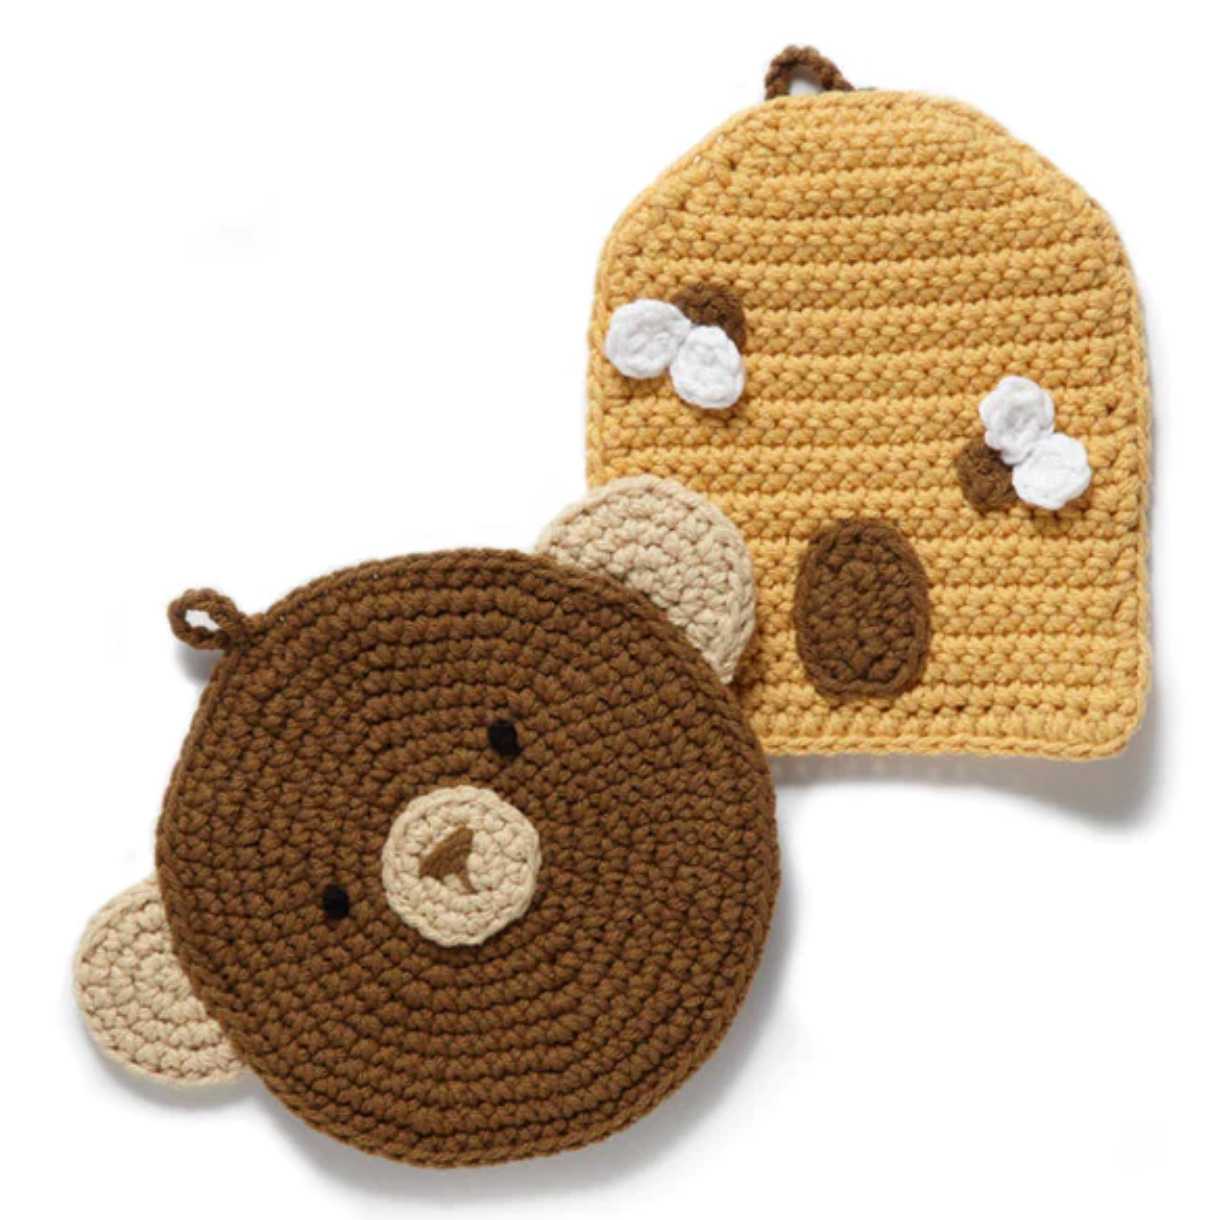 Beehive Potholder - Free Crochet Pattern